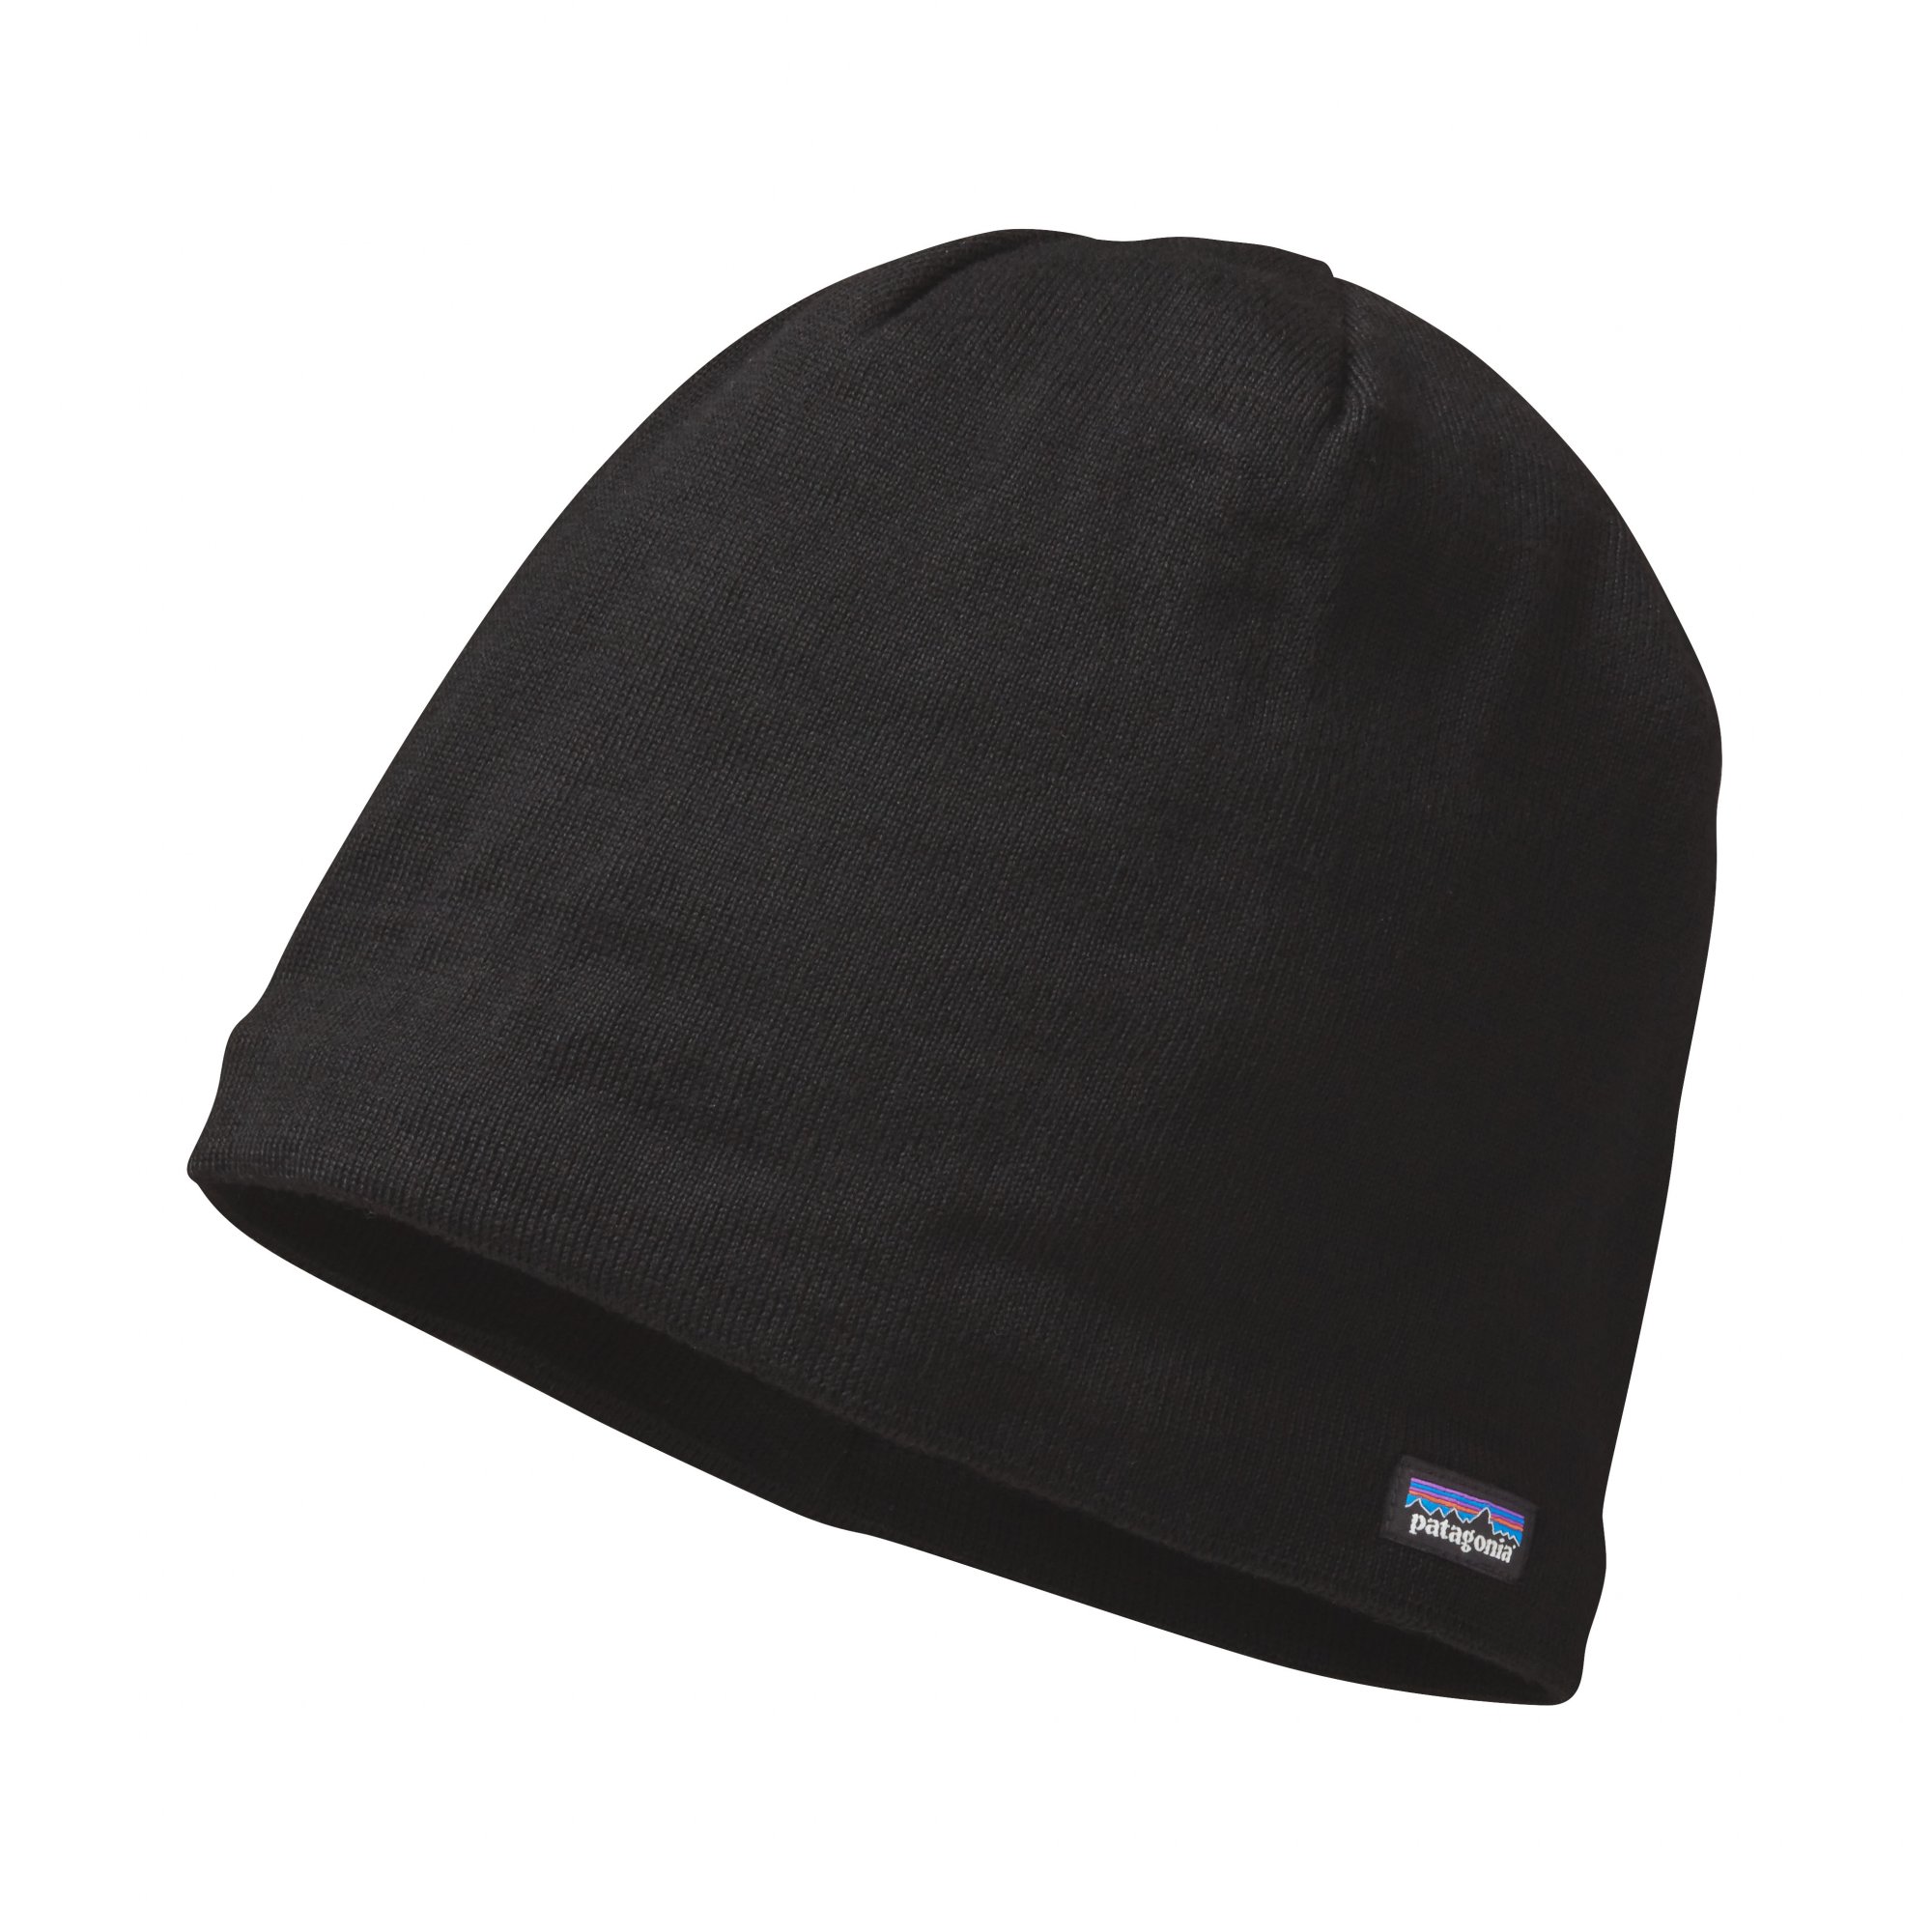 PATAGONIA Beanie Hat Black